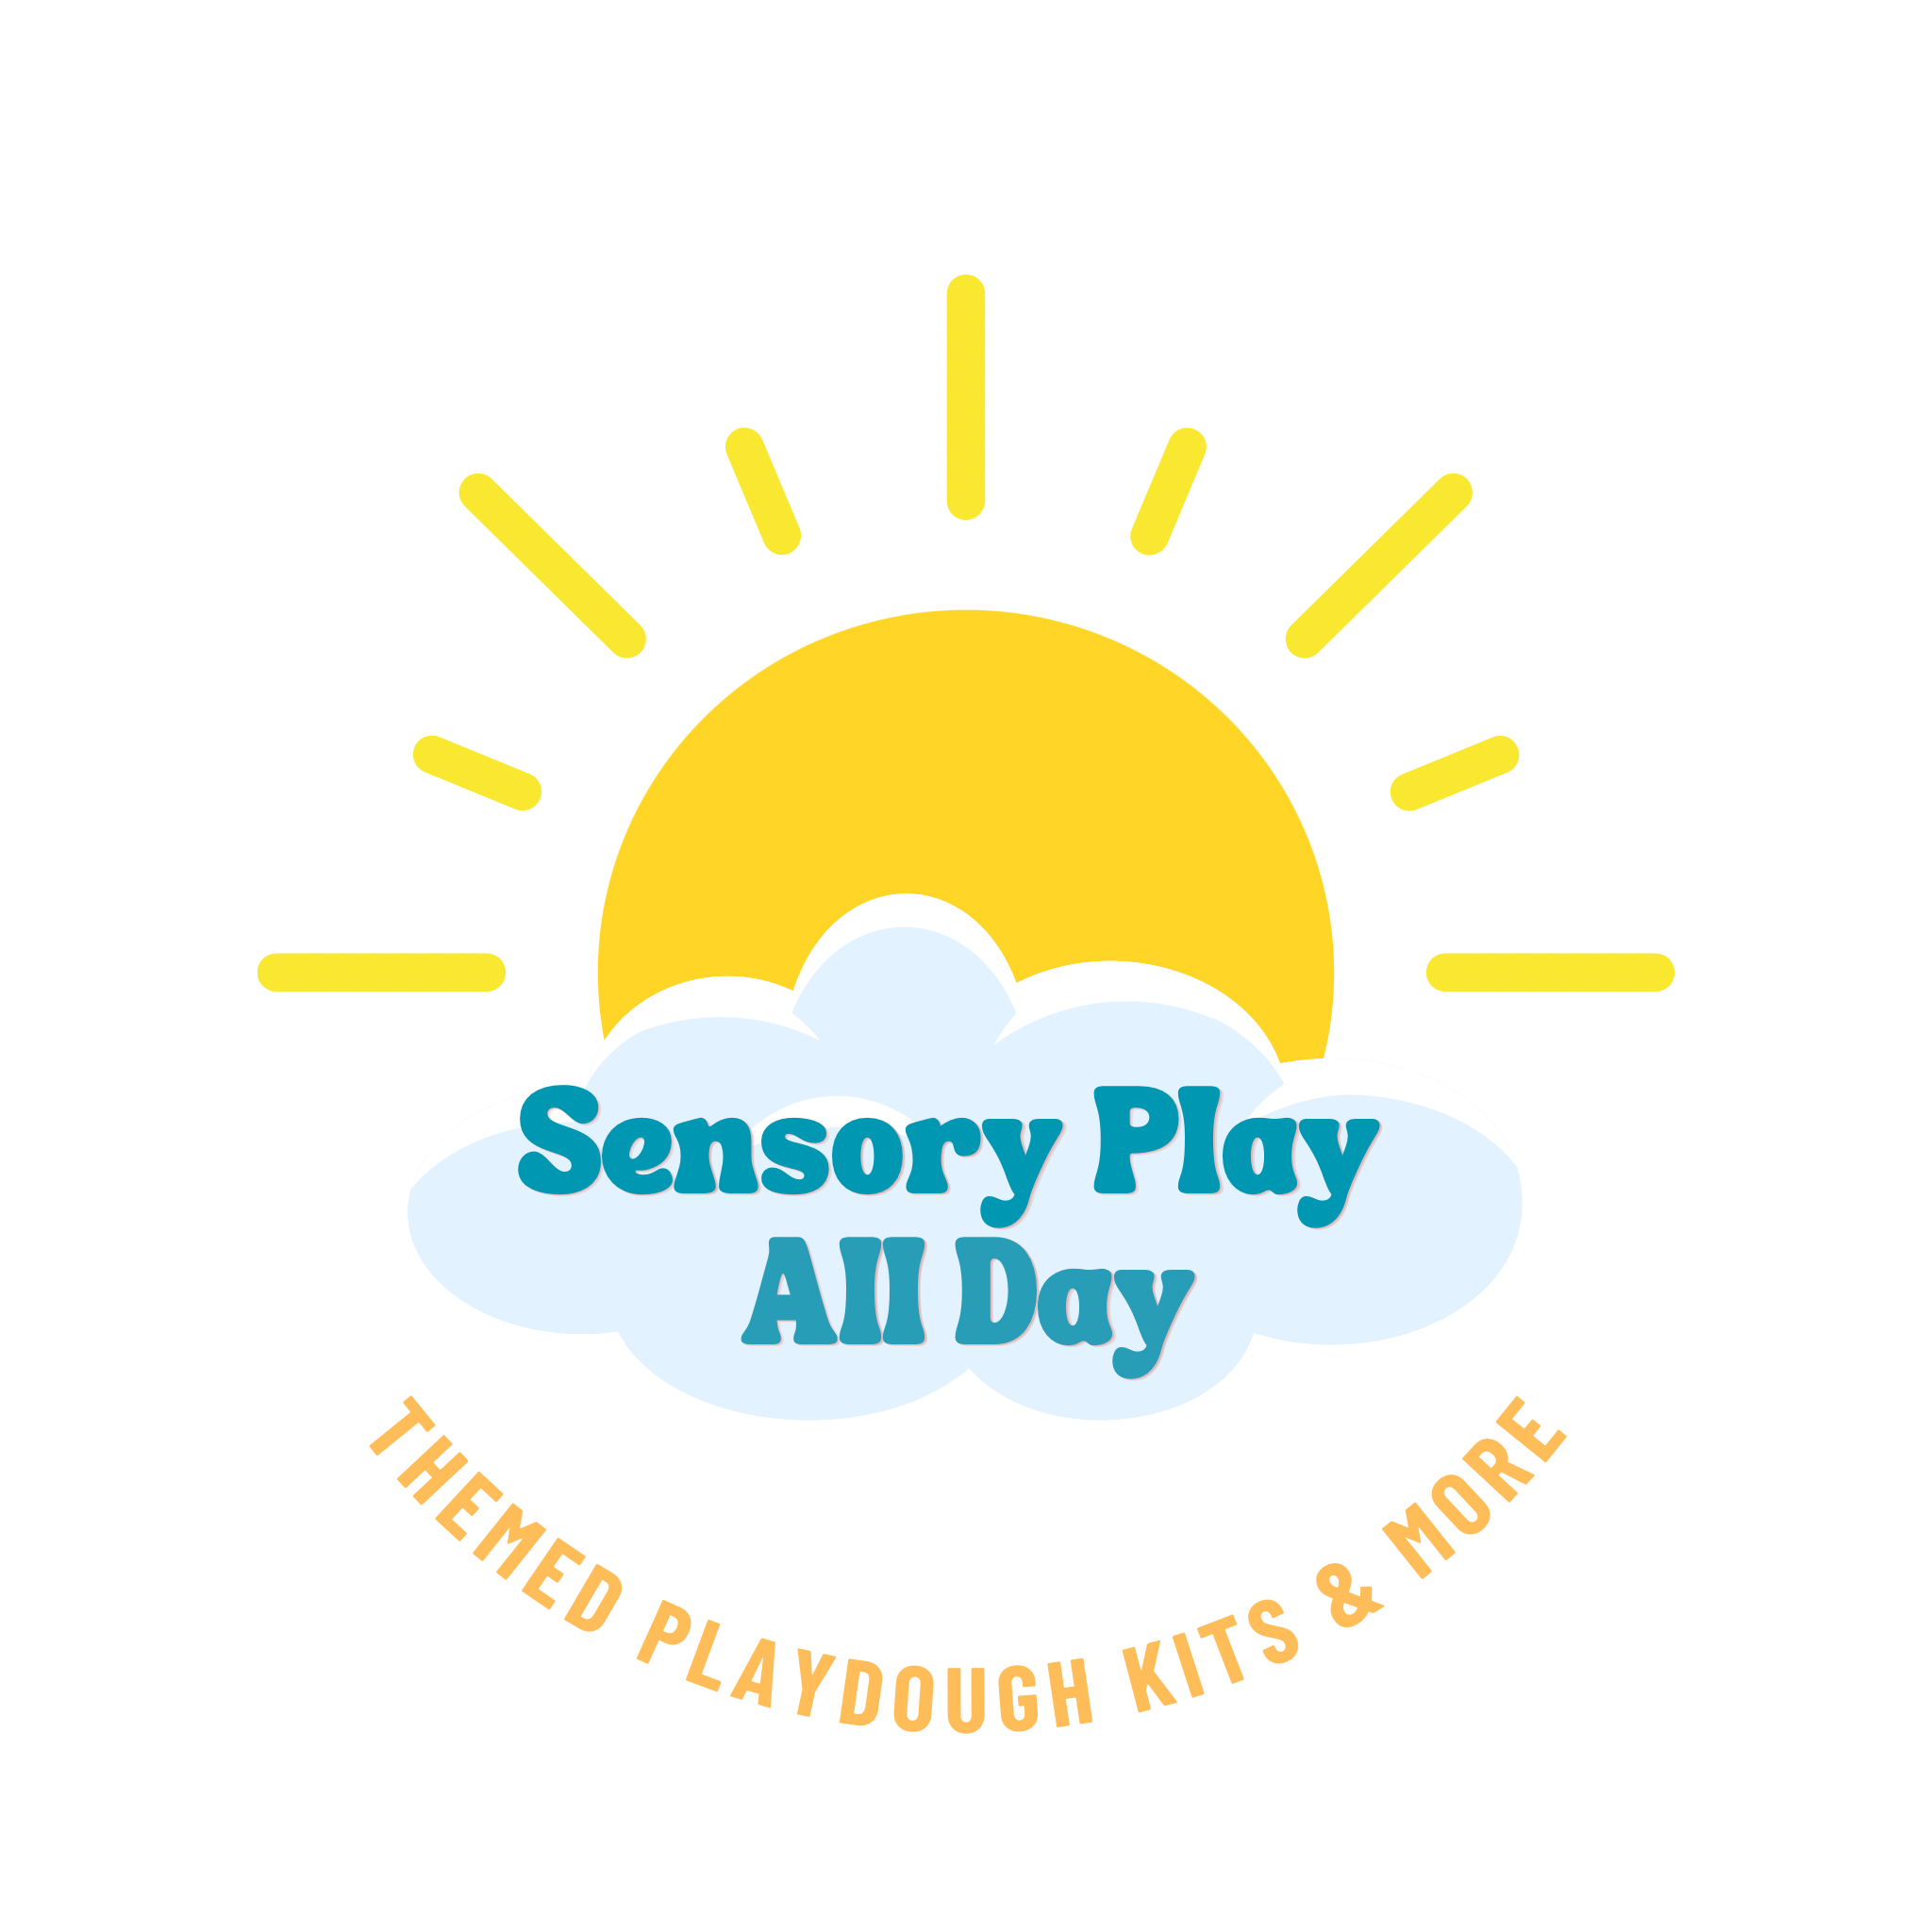 Sensory Play All Day